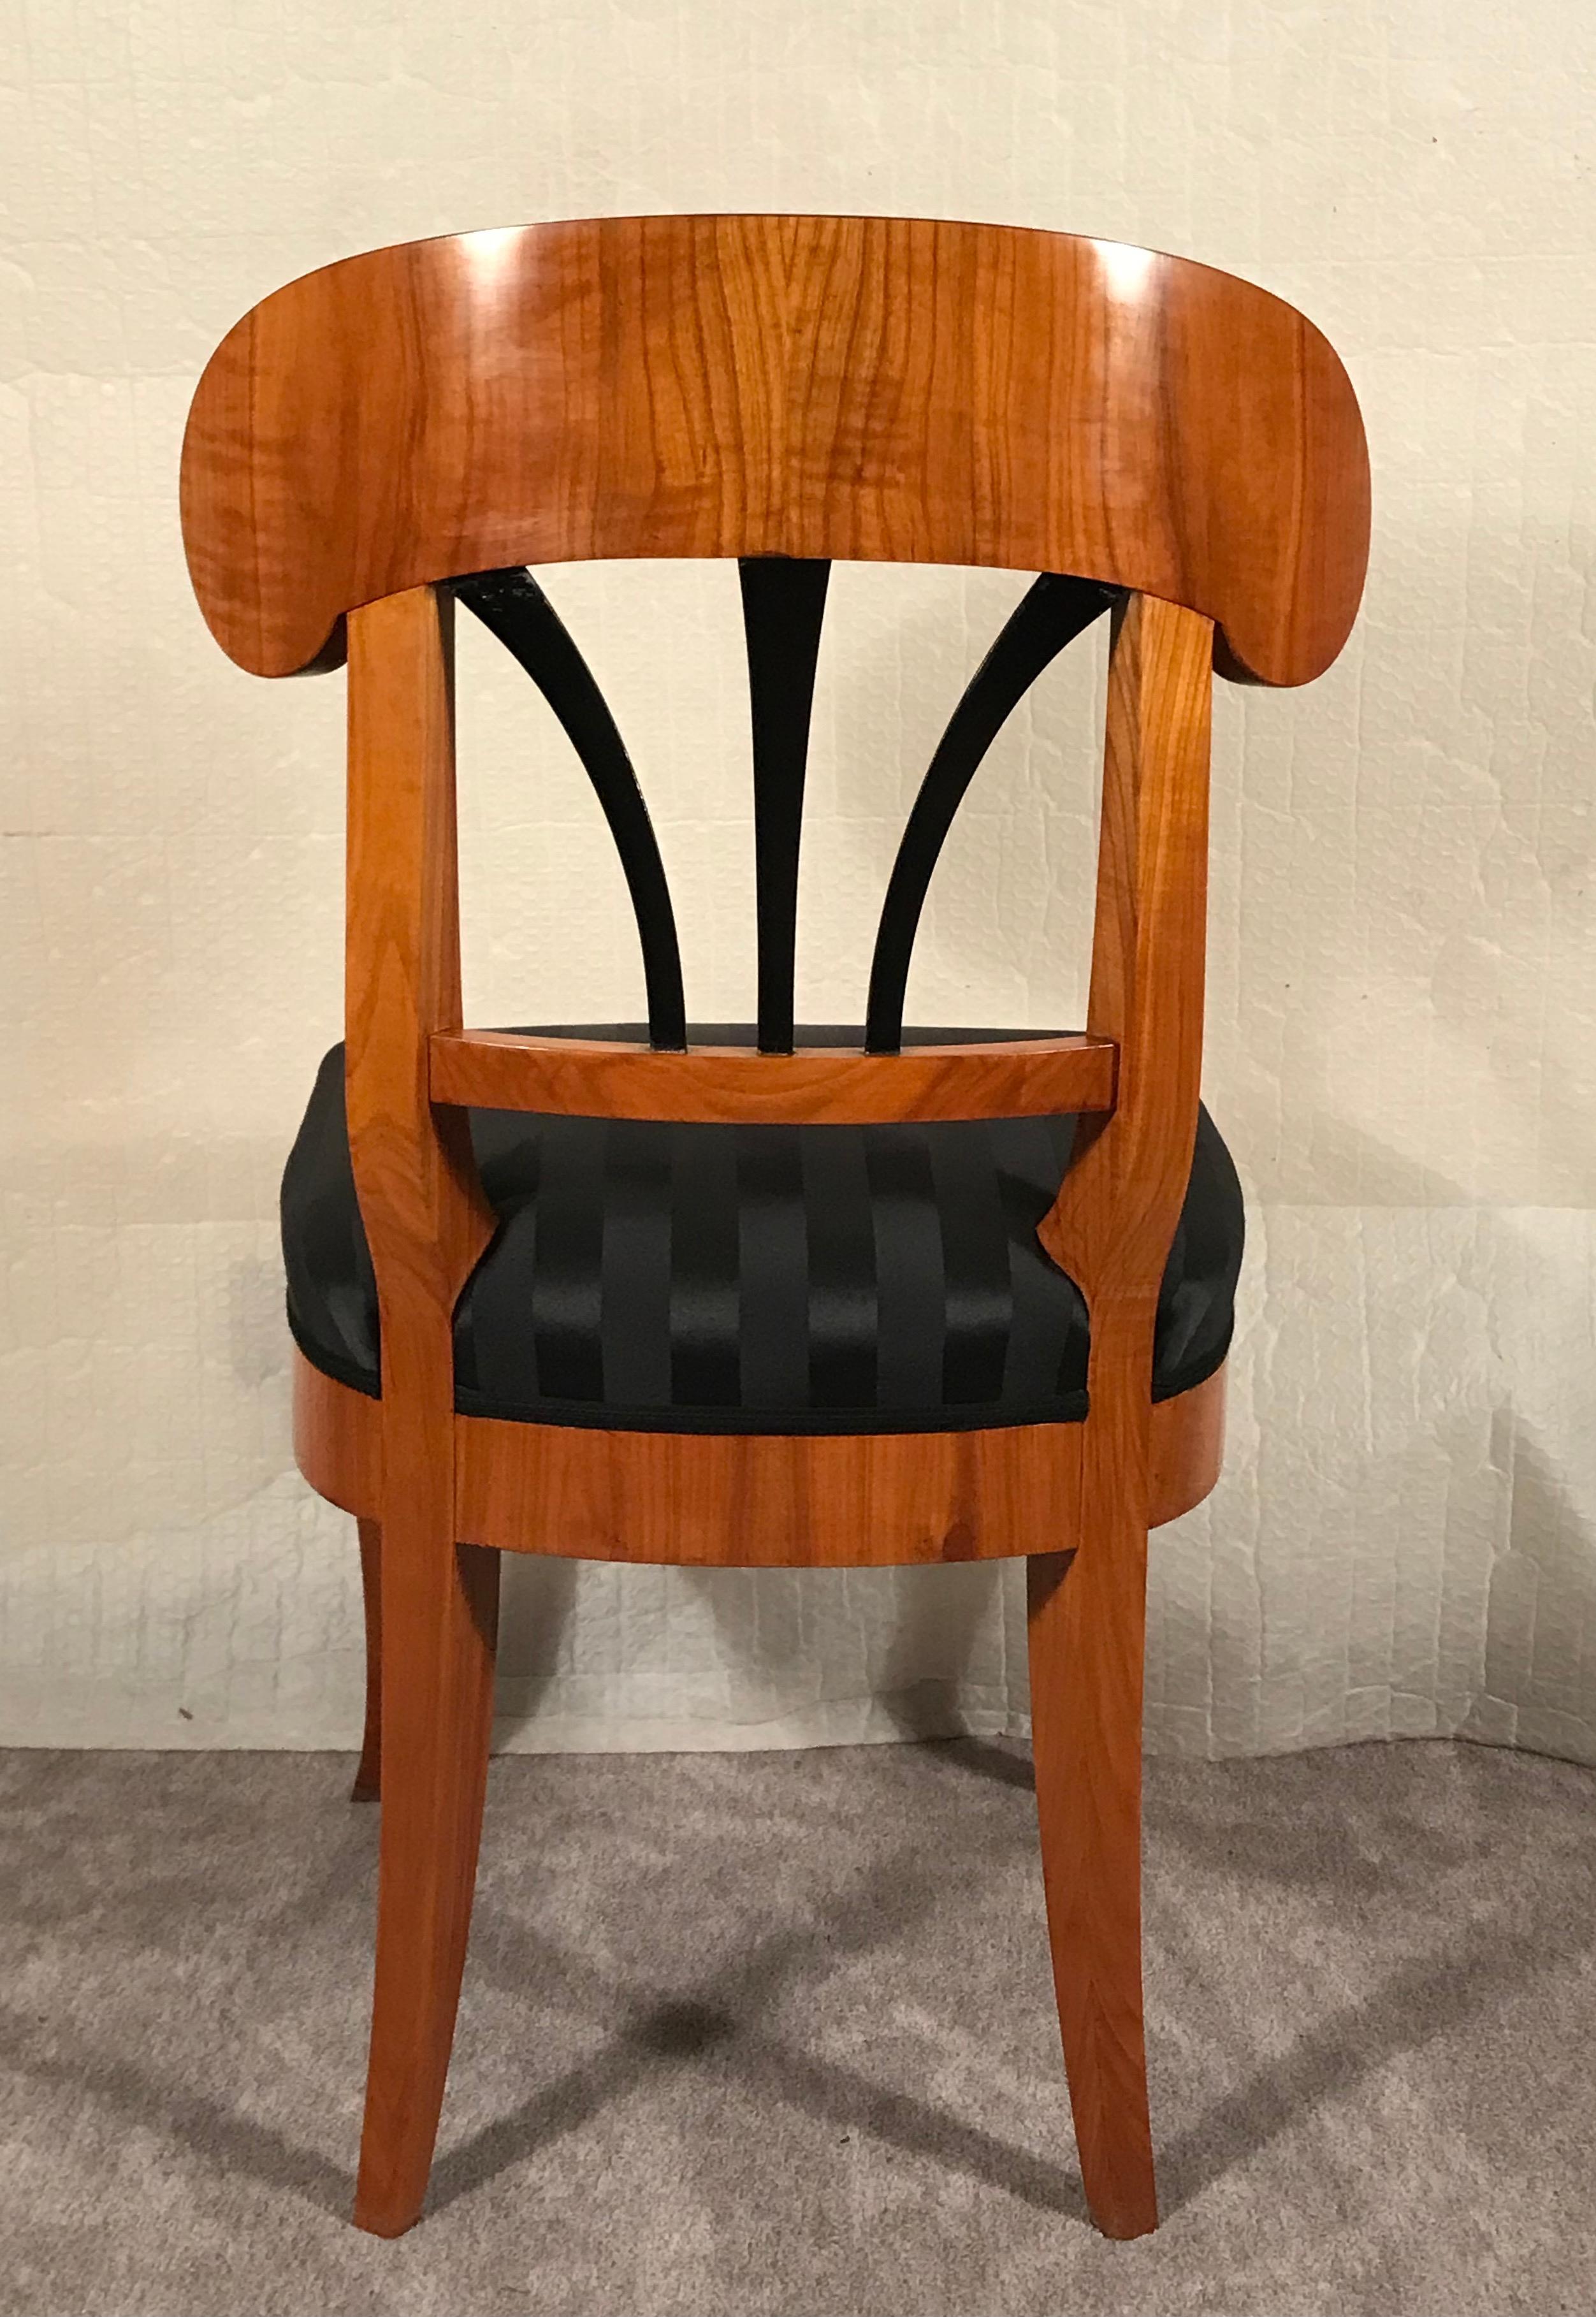 Early 19th Century Biedermeier Chair, South German 1820, Cherry